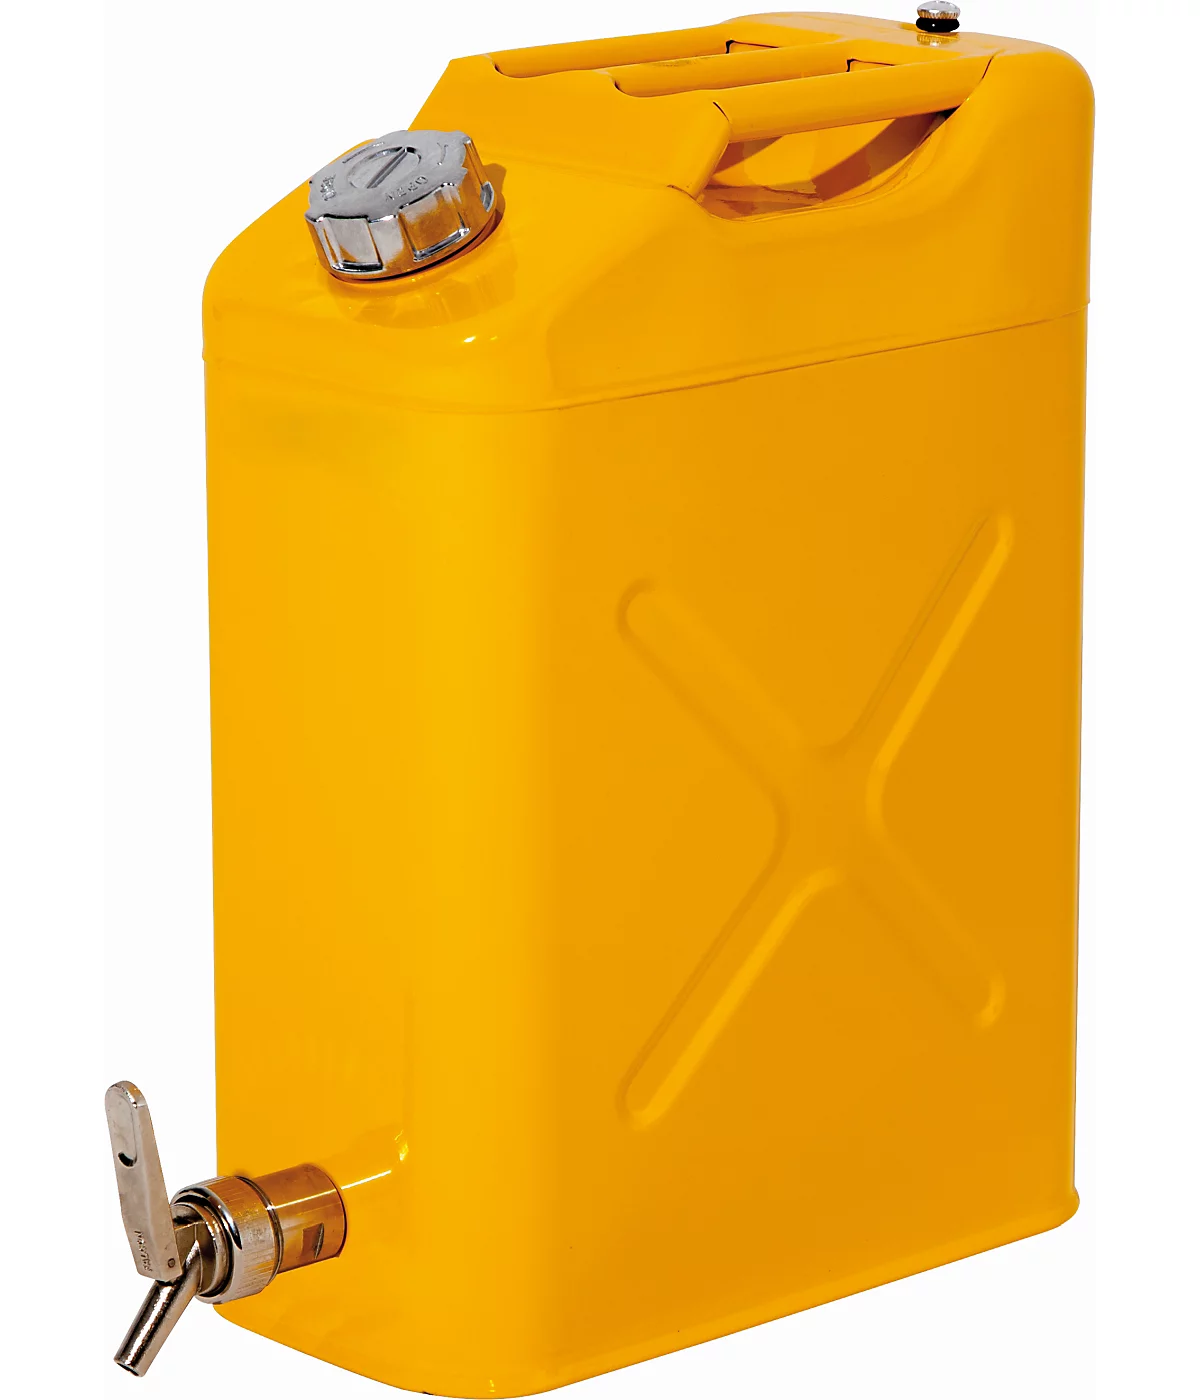 Sicherheitsbehälter, Stahlblech, gelb, 20 l, B 170 x T 445 x H 470 mm, Schraubverschluss, Belüftungsventil